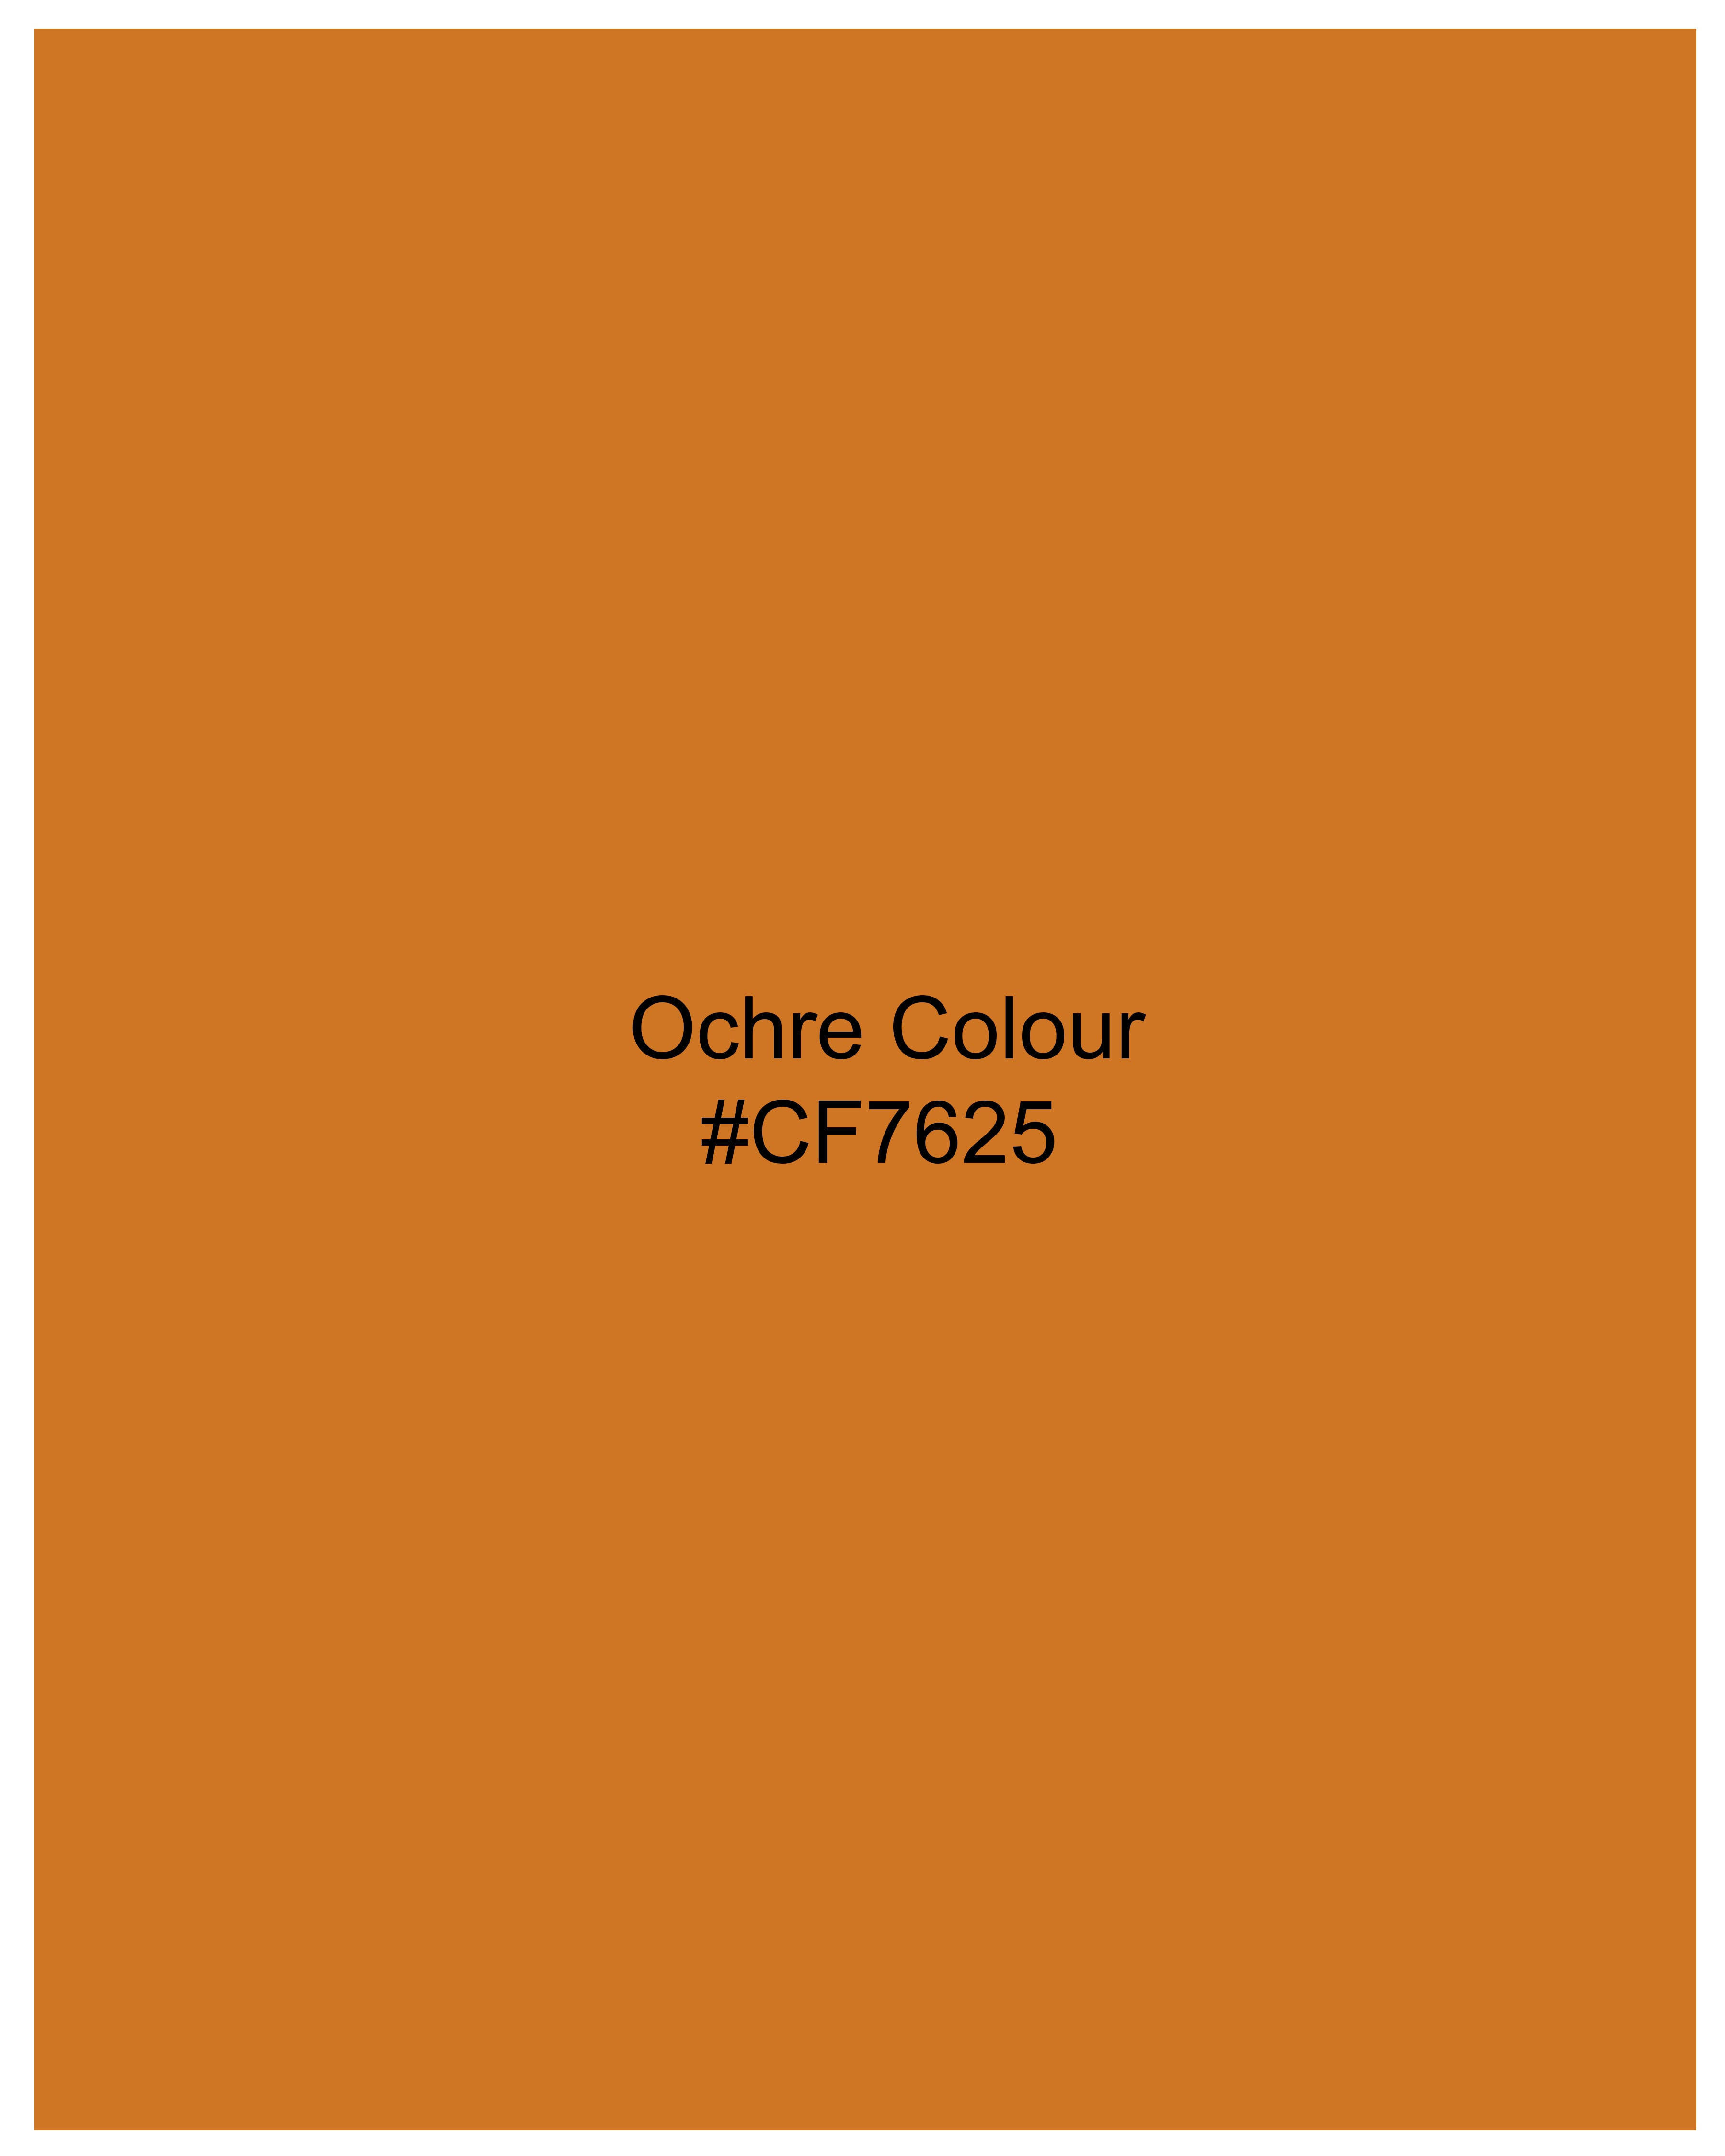 Orche Orange Organic Cotton Mercerised Pique Polo TS811-S, TS811-M, TS811-L, TS811-XL, TS811-XXL